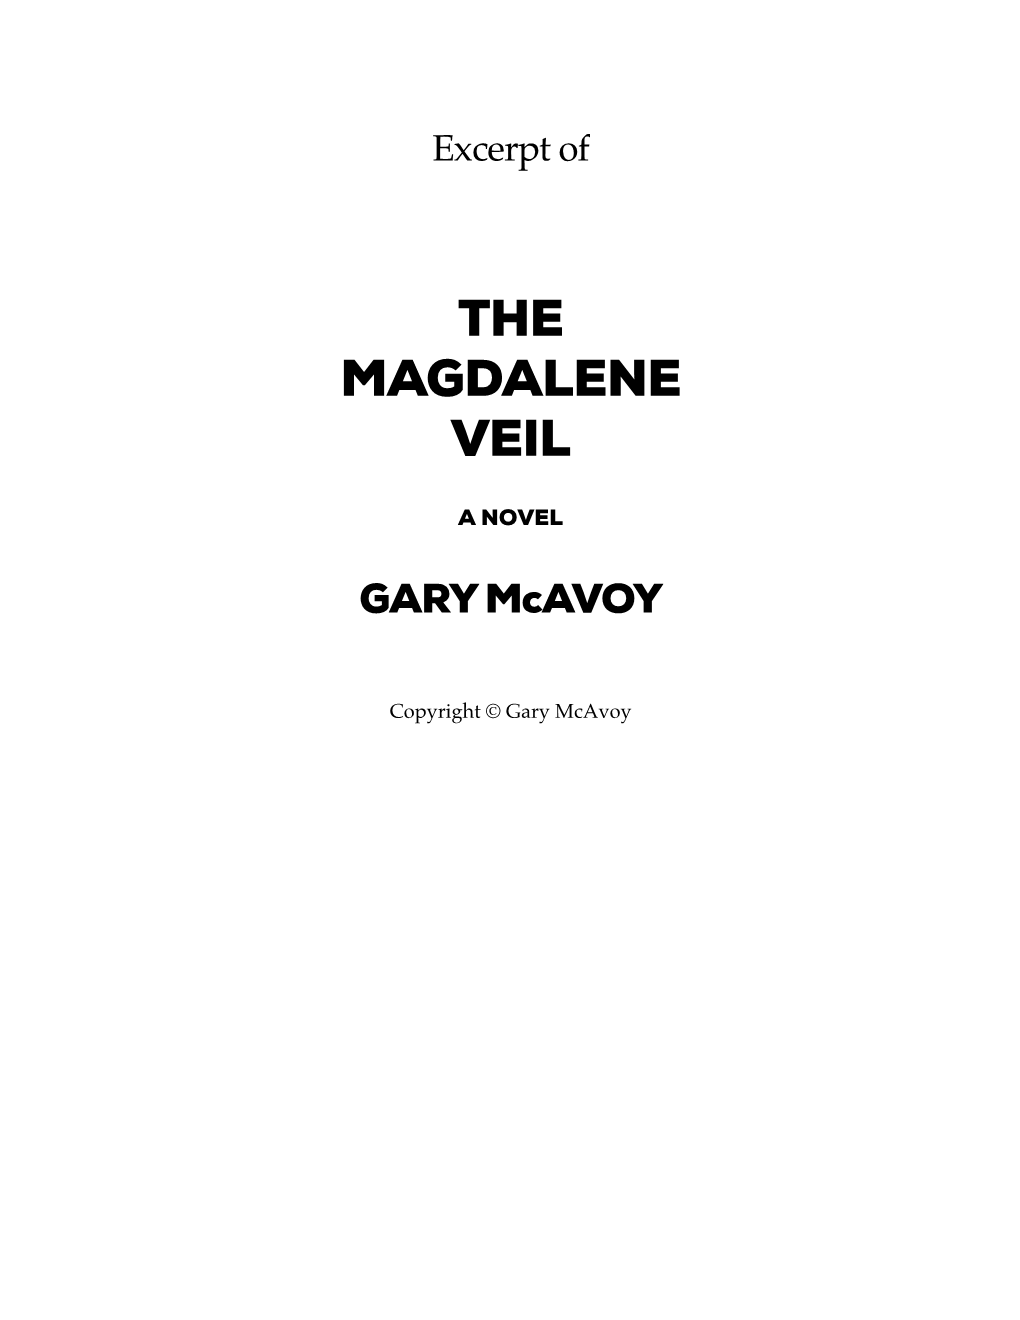 The Magdalene Veil Excerpt